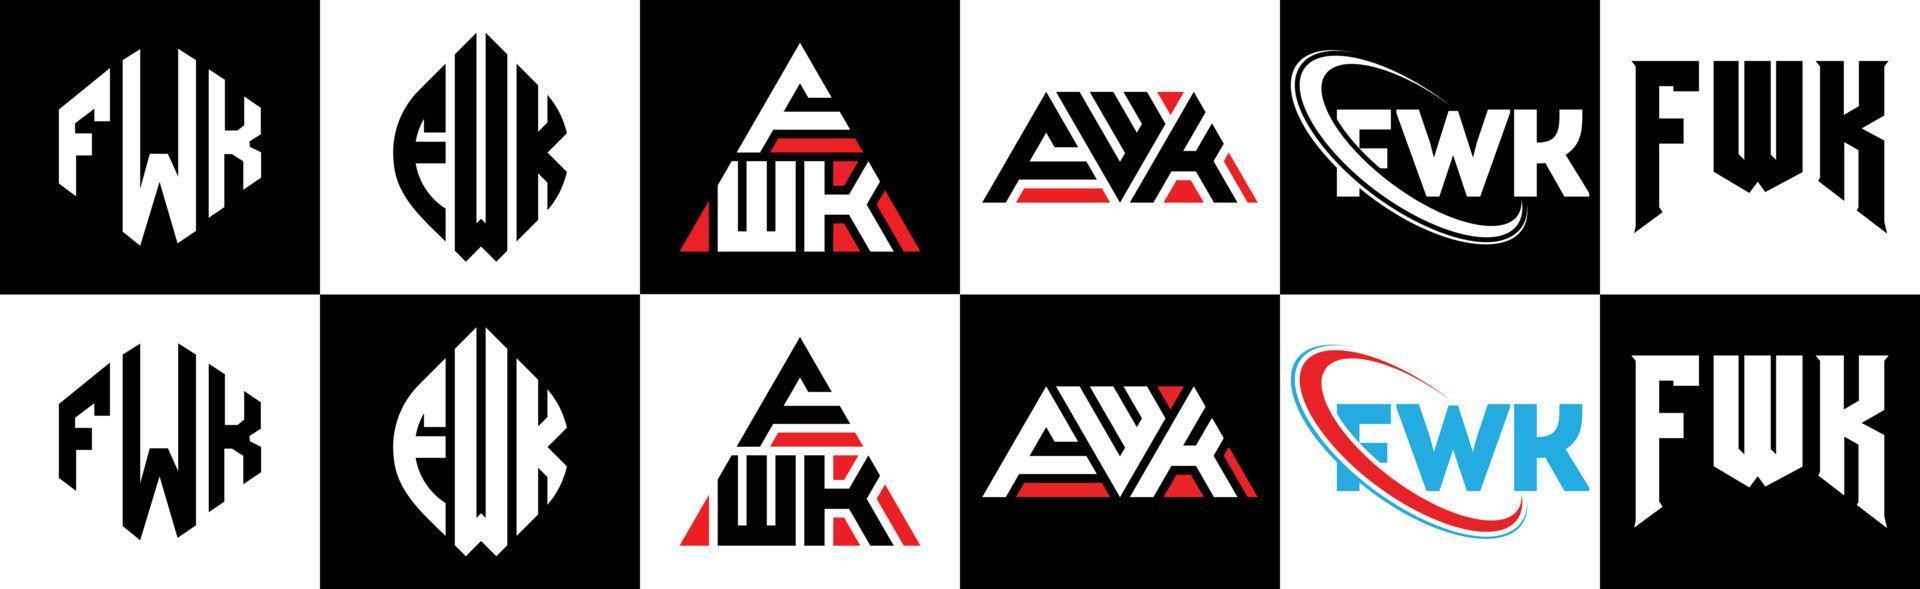 design de logotipo de carta fwk em seis estilos. fwk polígono, círculo, triângulo, hexágono, estilo plano e simples com logotipo de carta de variação de cor preto e branco definido em uma prancheta. fwk logotipo minimalista e clássico vetor